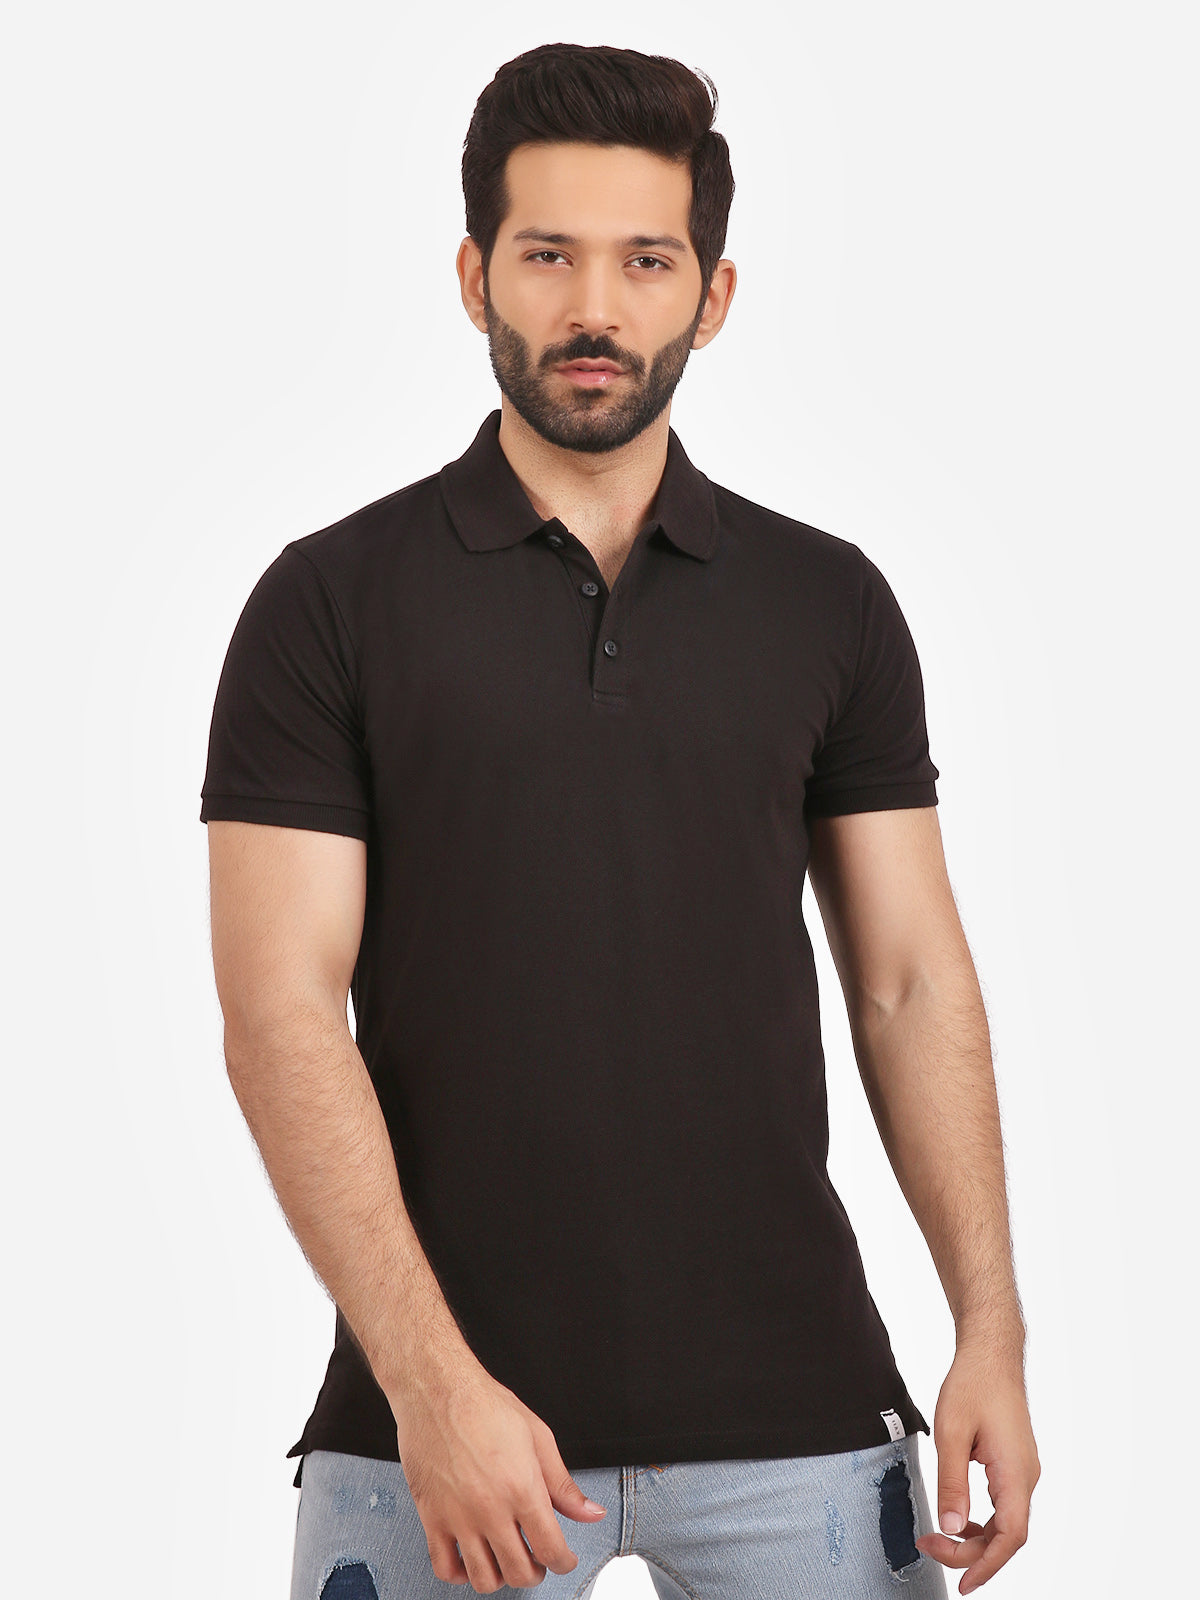 Men's Black Polo Shirt - FMTCP20-006